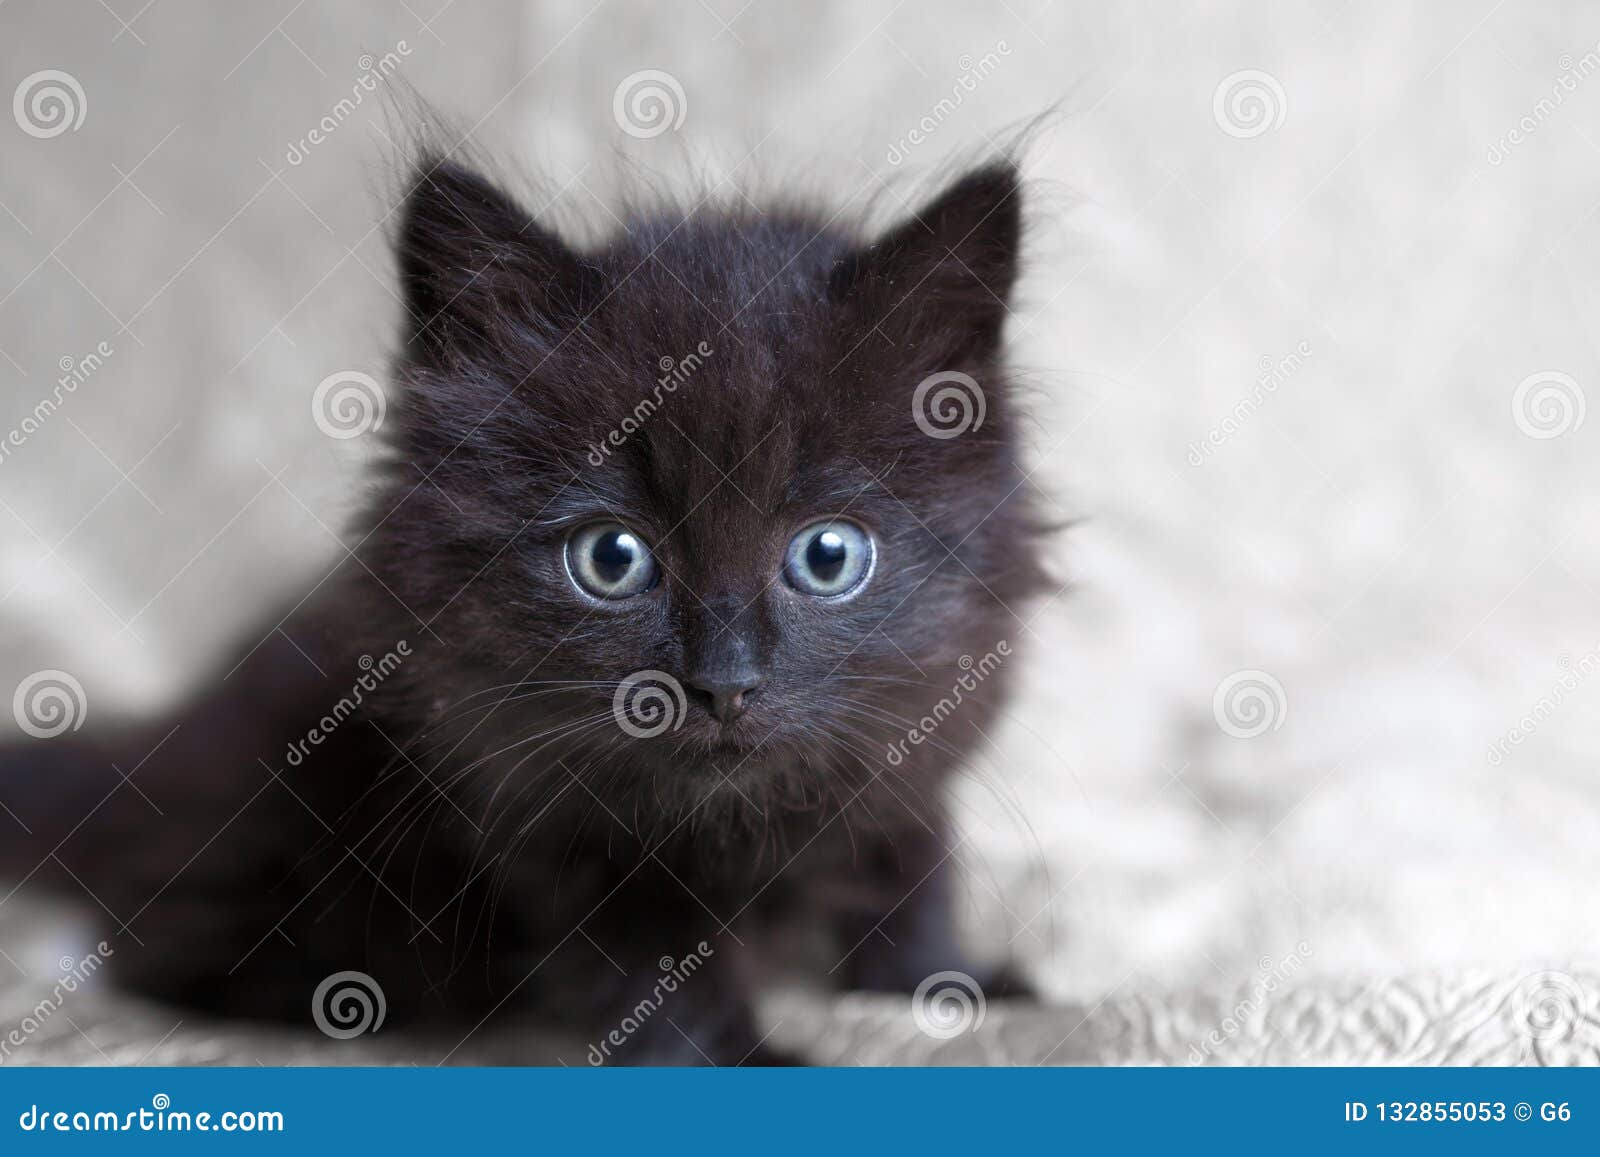 black kitten furry